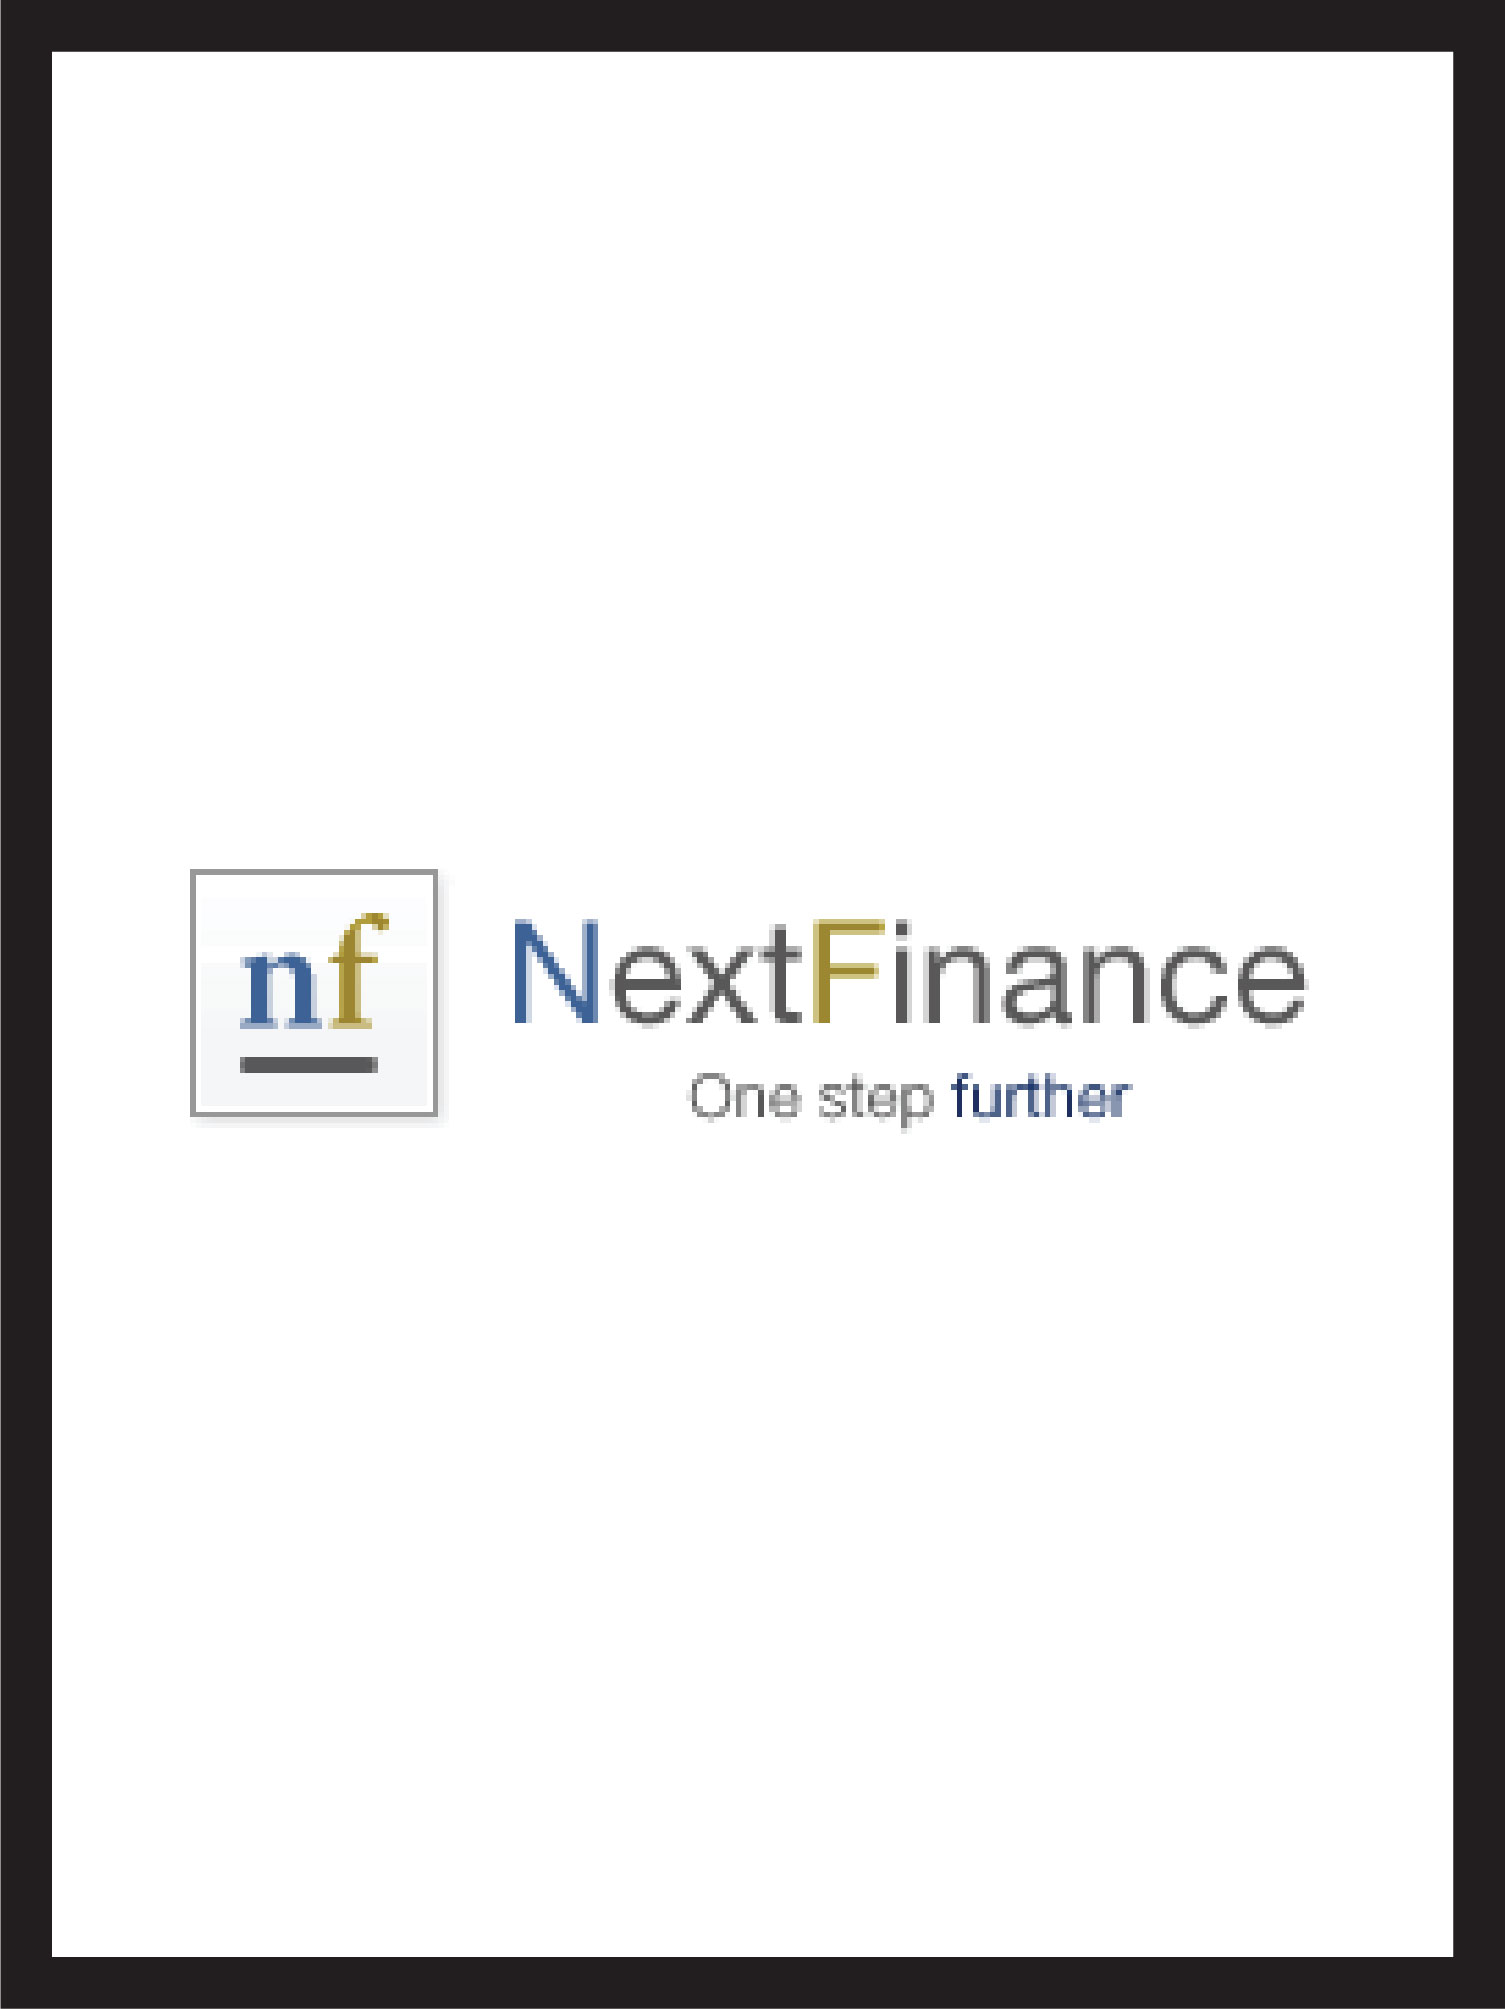 logo of the magazine next finance